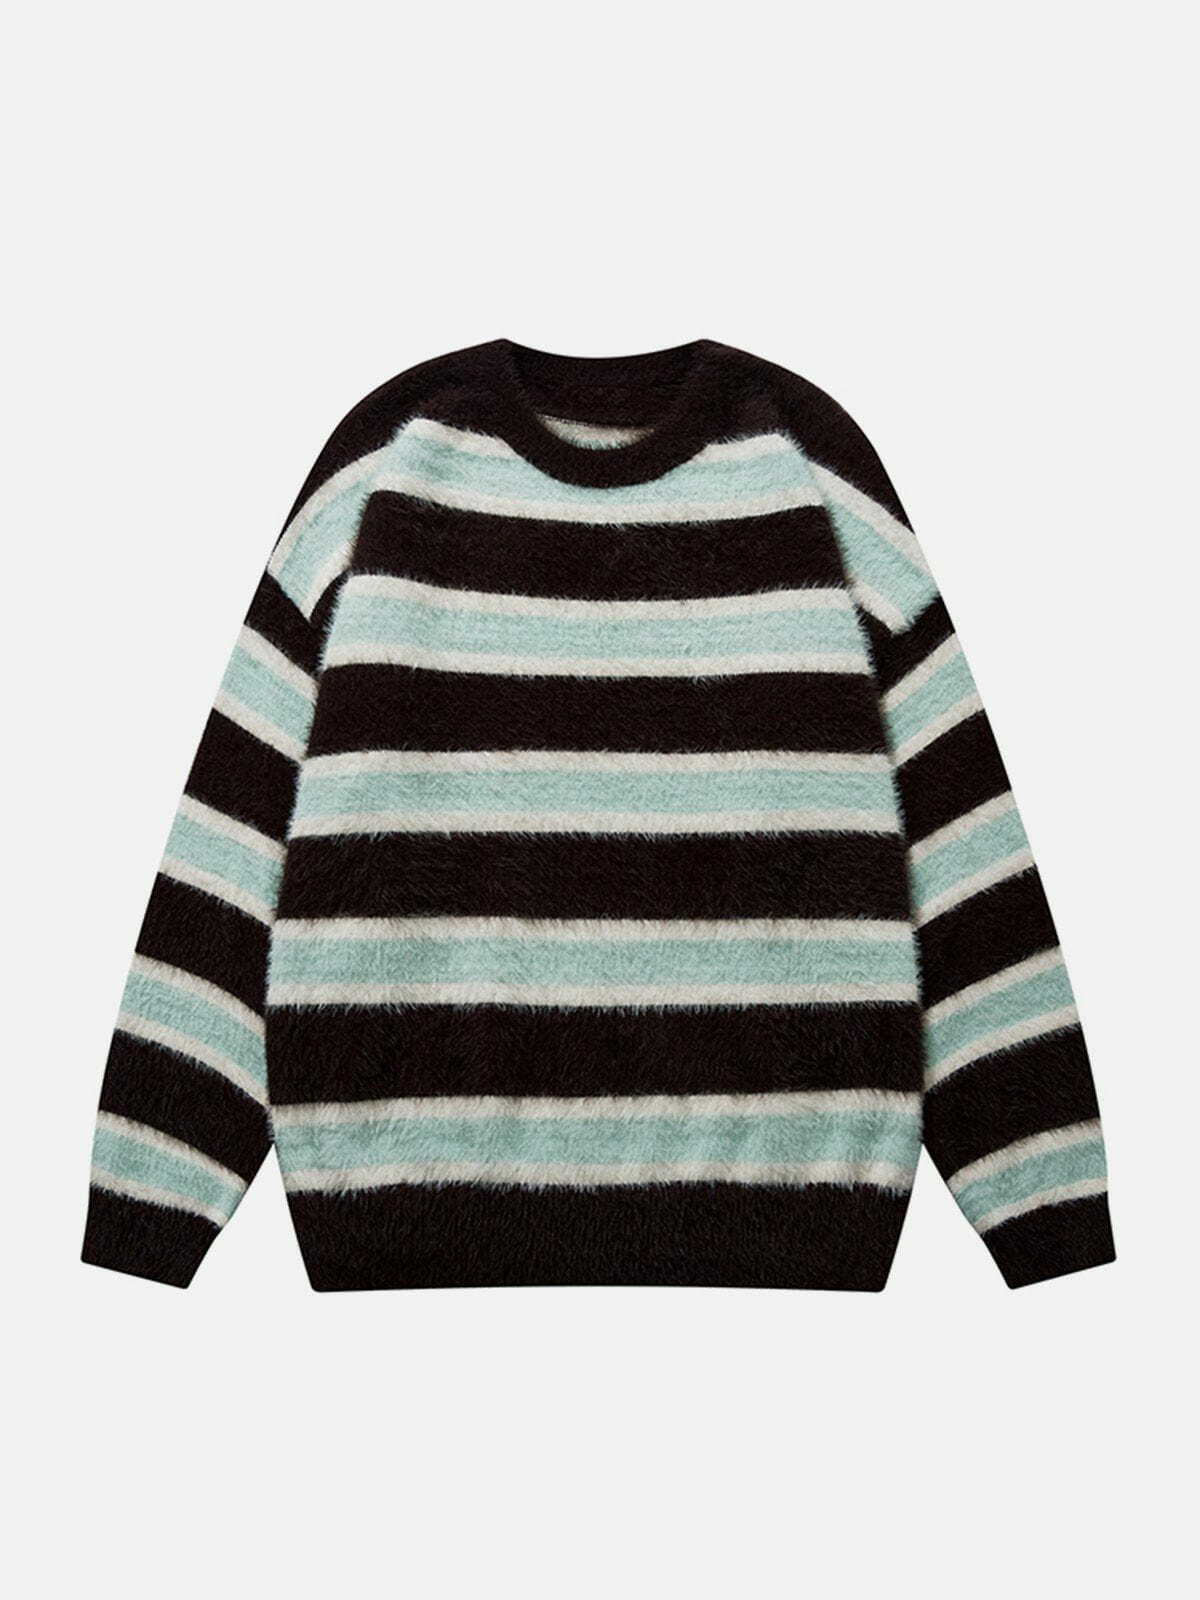 striped jacquard sweater edgy urban knitwear 2468